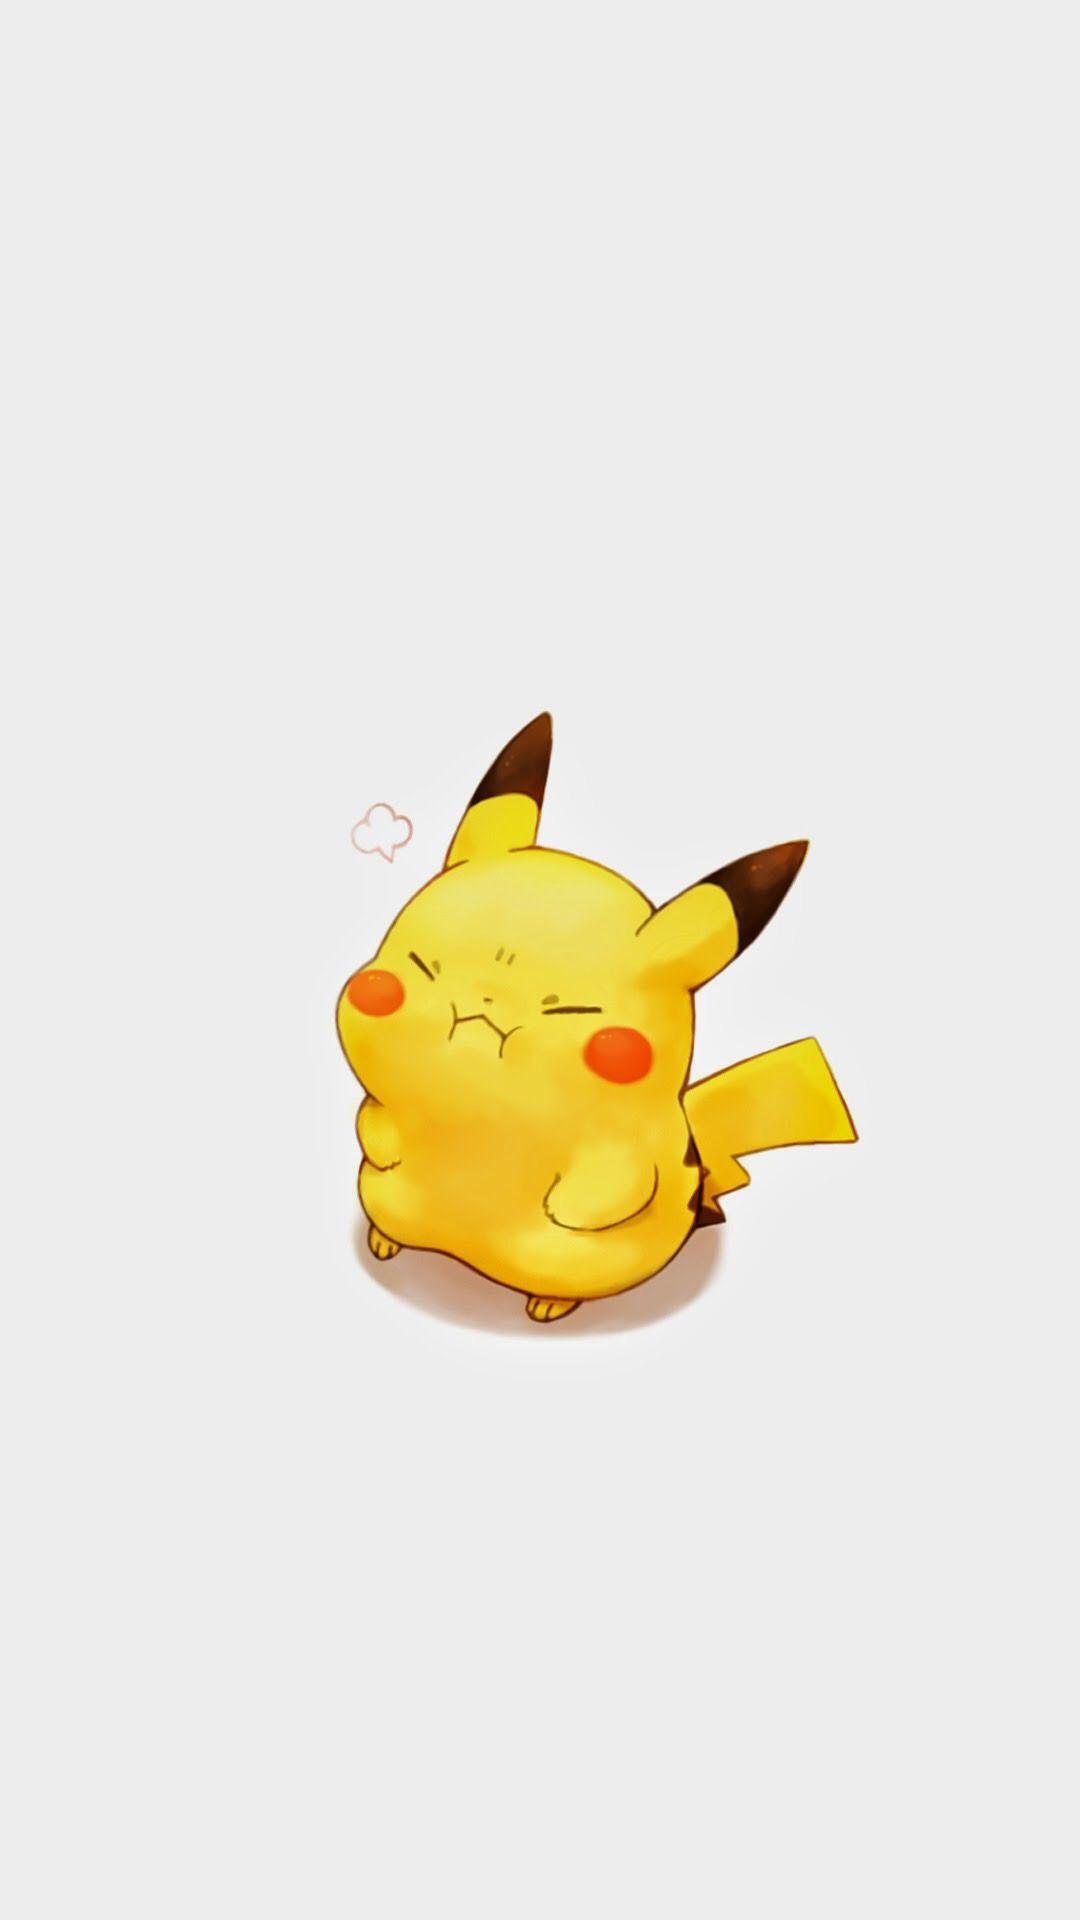 Cute Baby Pikachu Wallpapers Wallpaper Cave